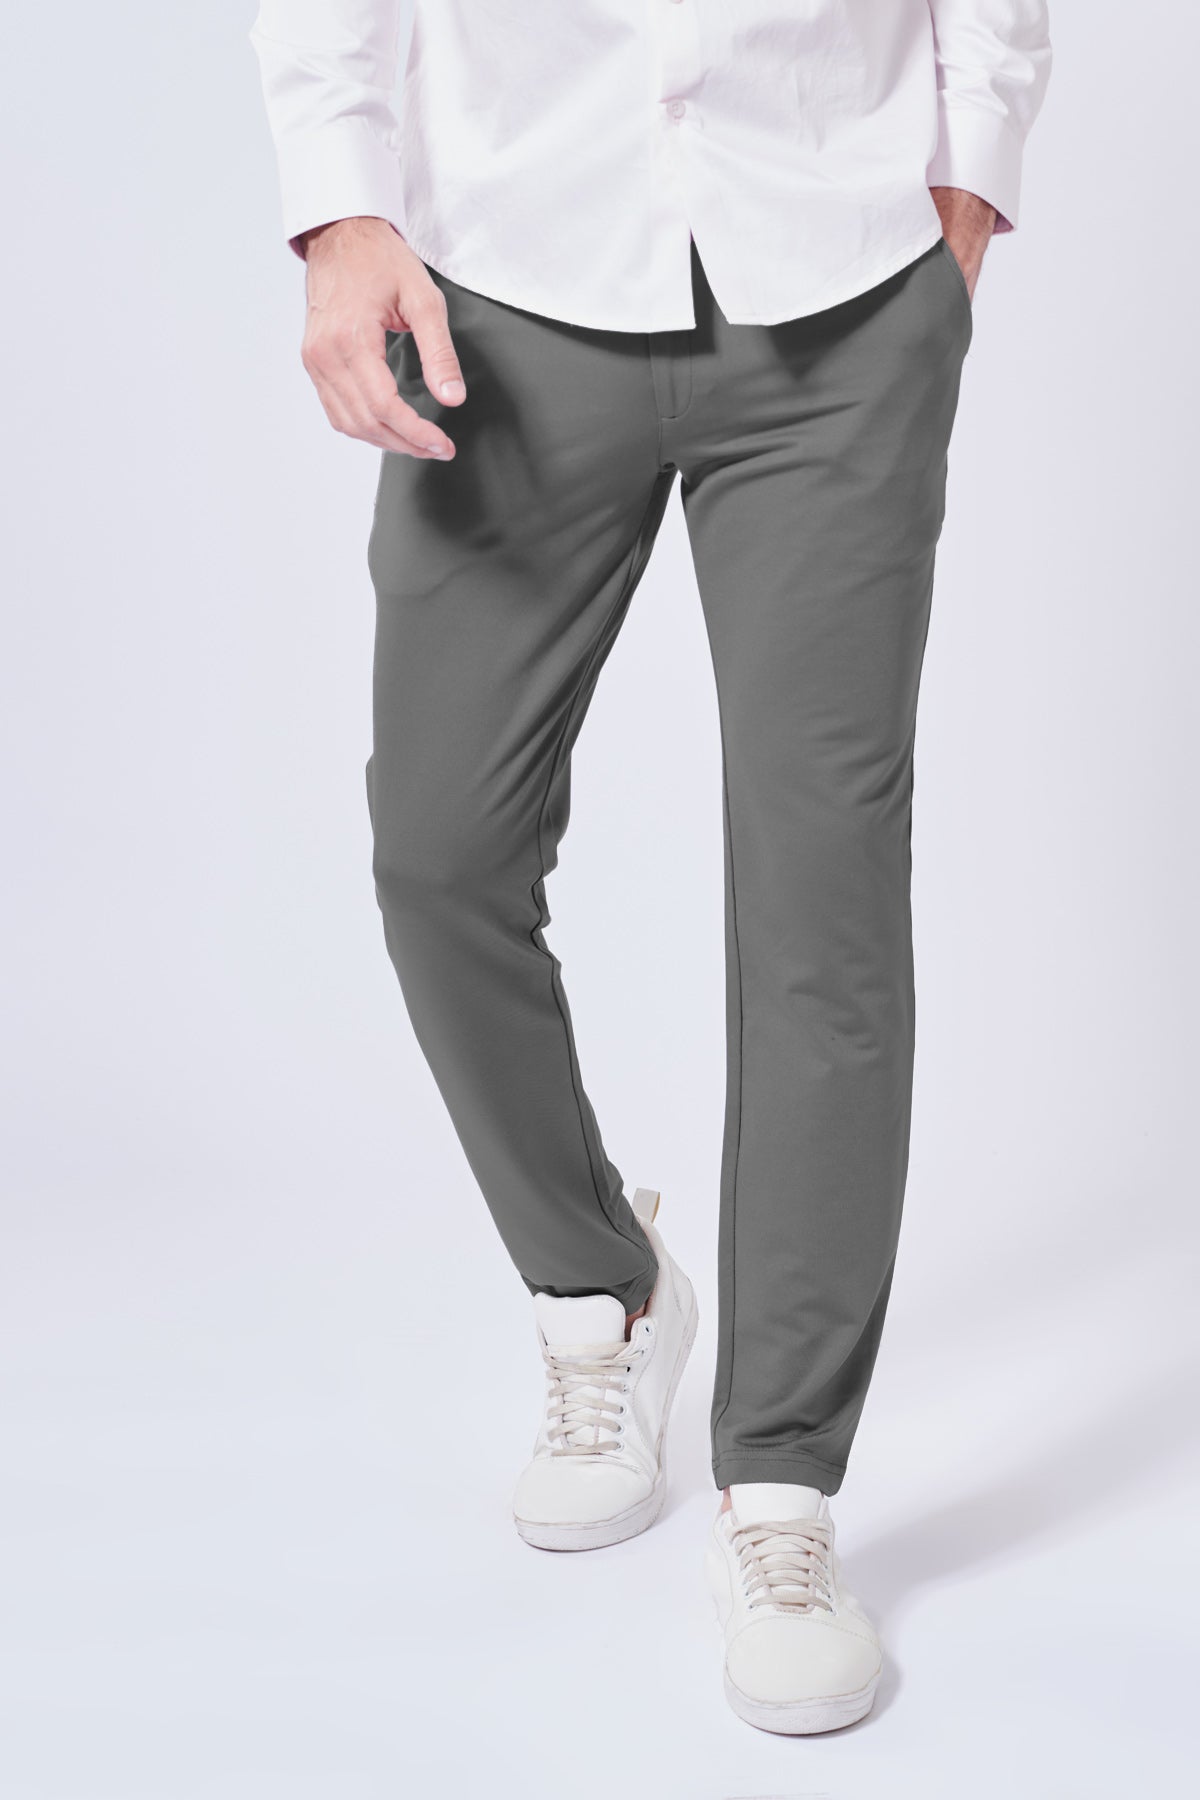 Buy Inspire Steel Grey Slim FIT Formal Trouser for Men 42 at Amazonin